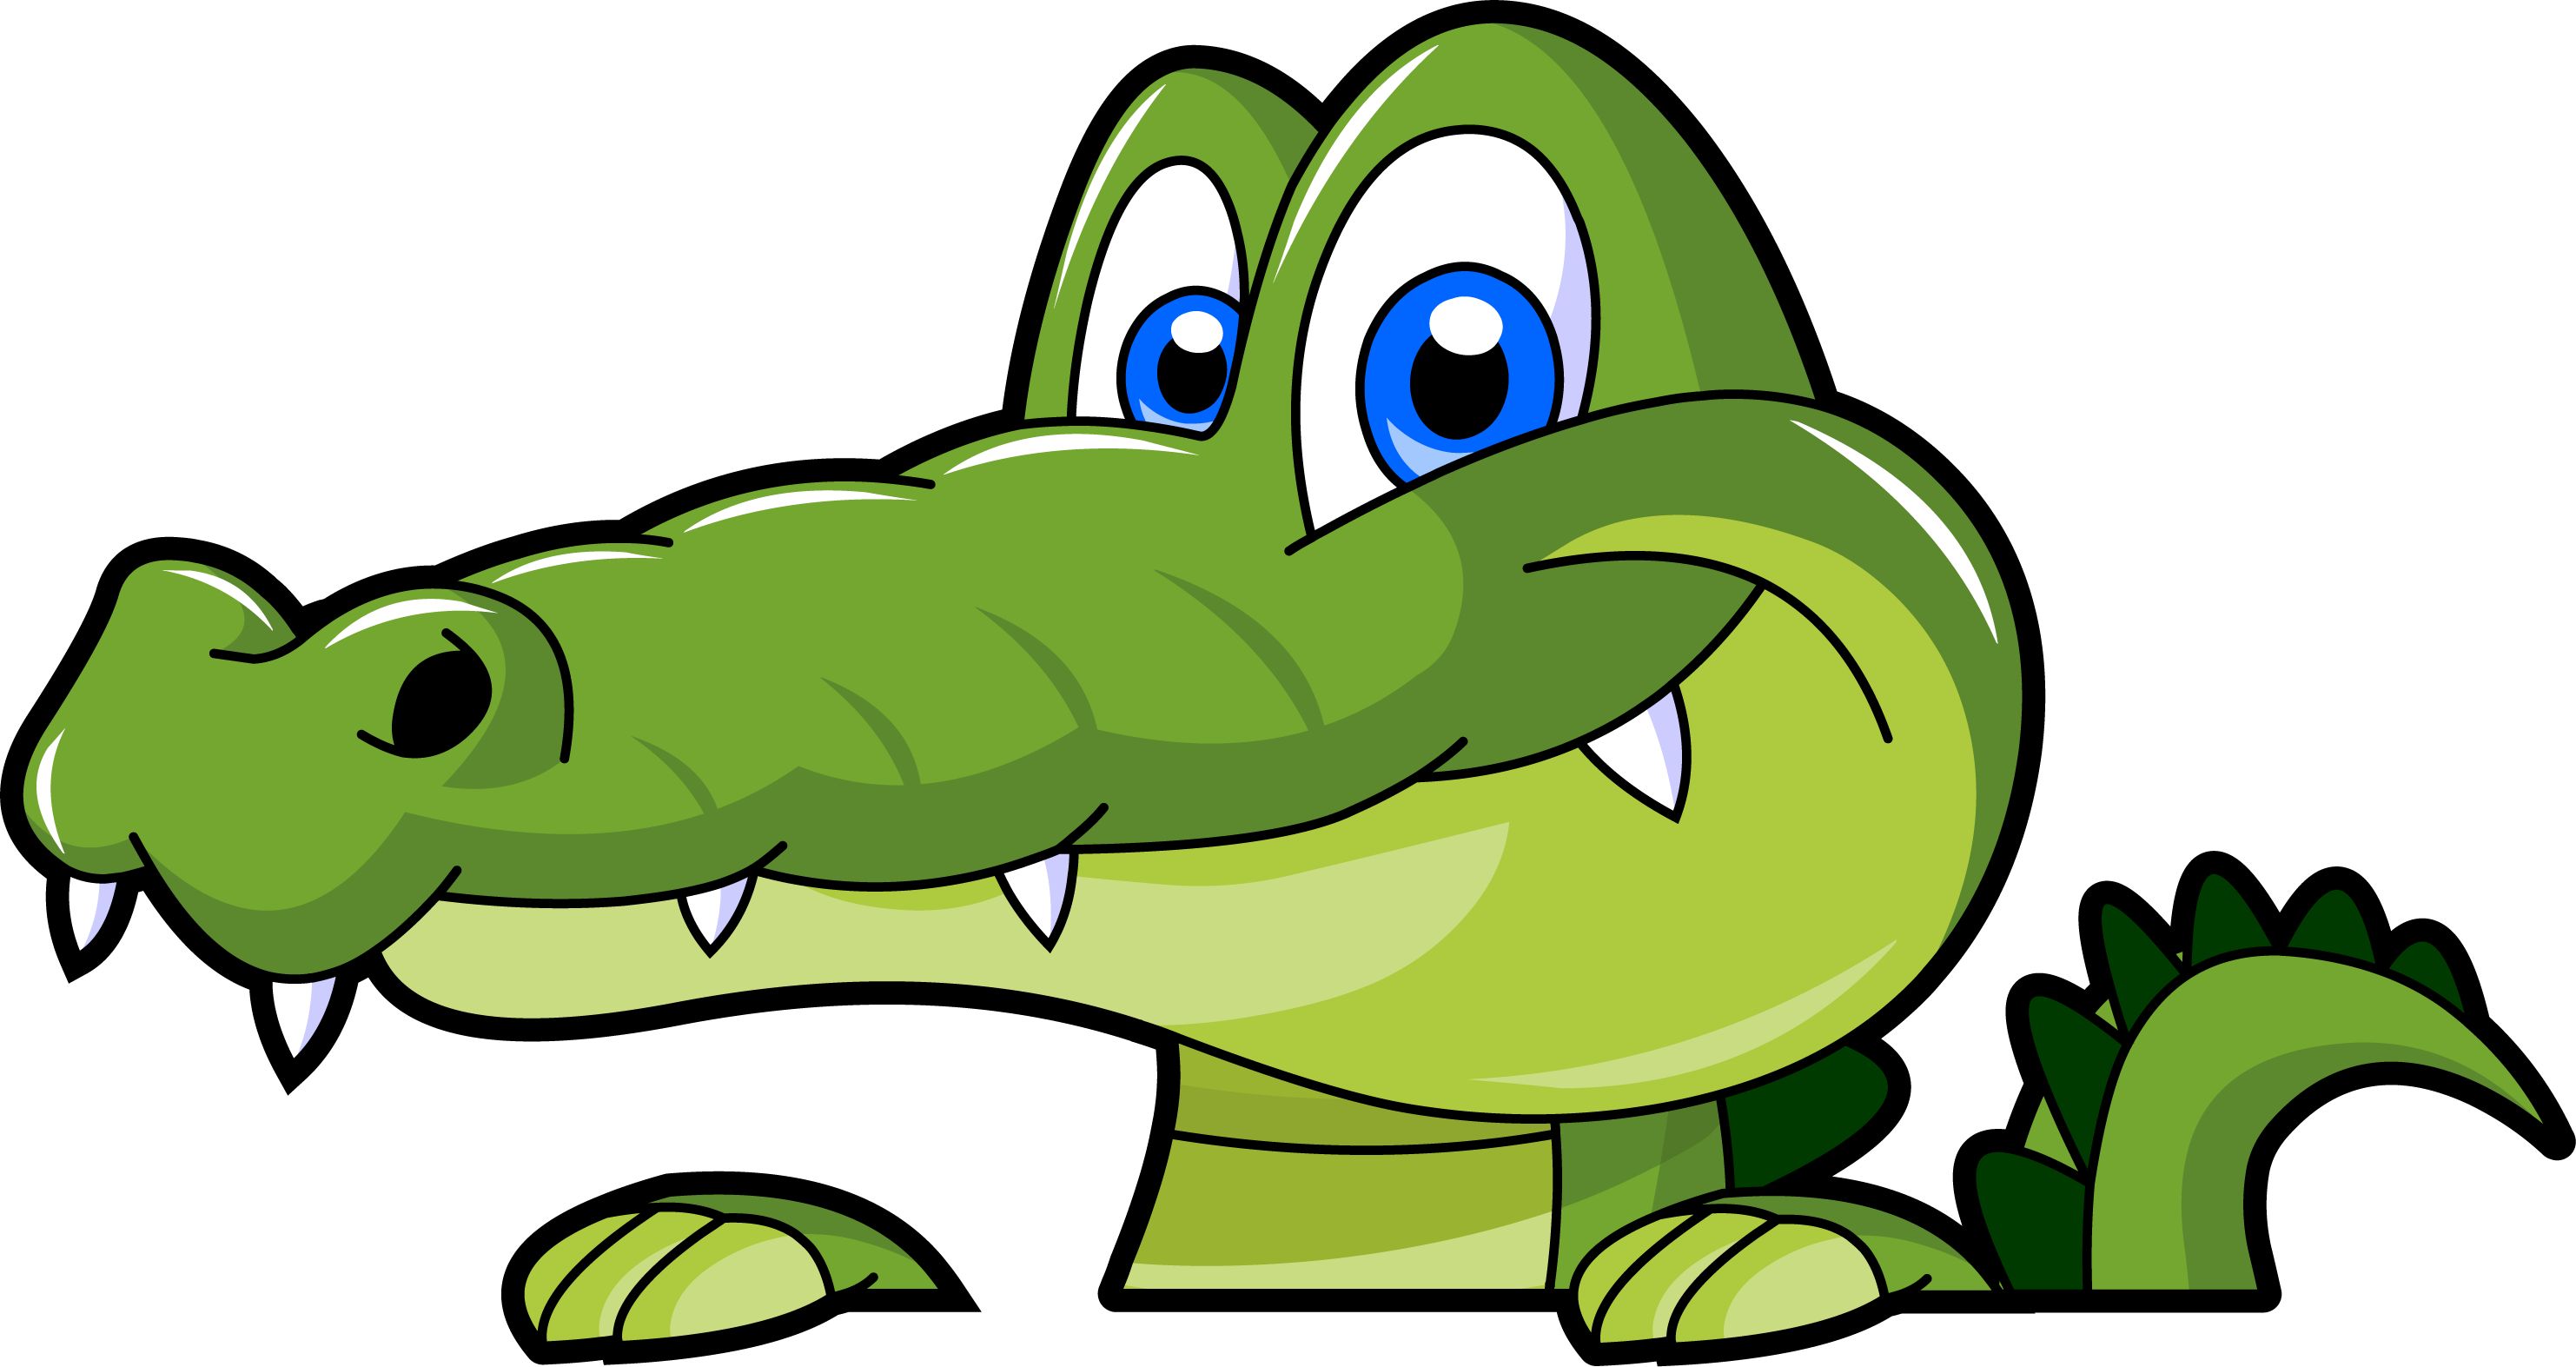 Swamp alligator cartoon clipart image clipartall